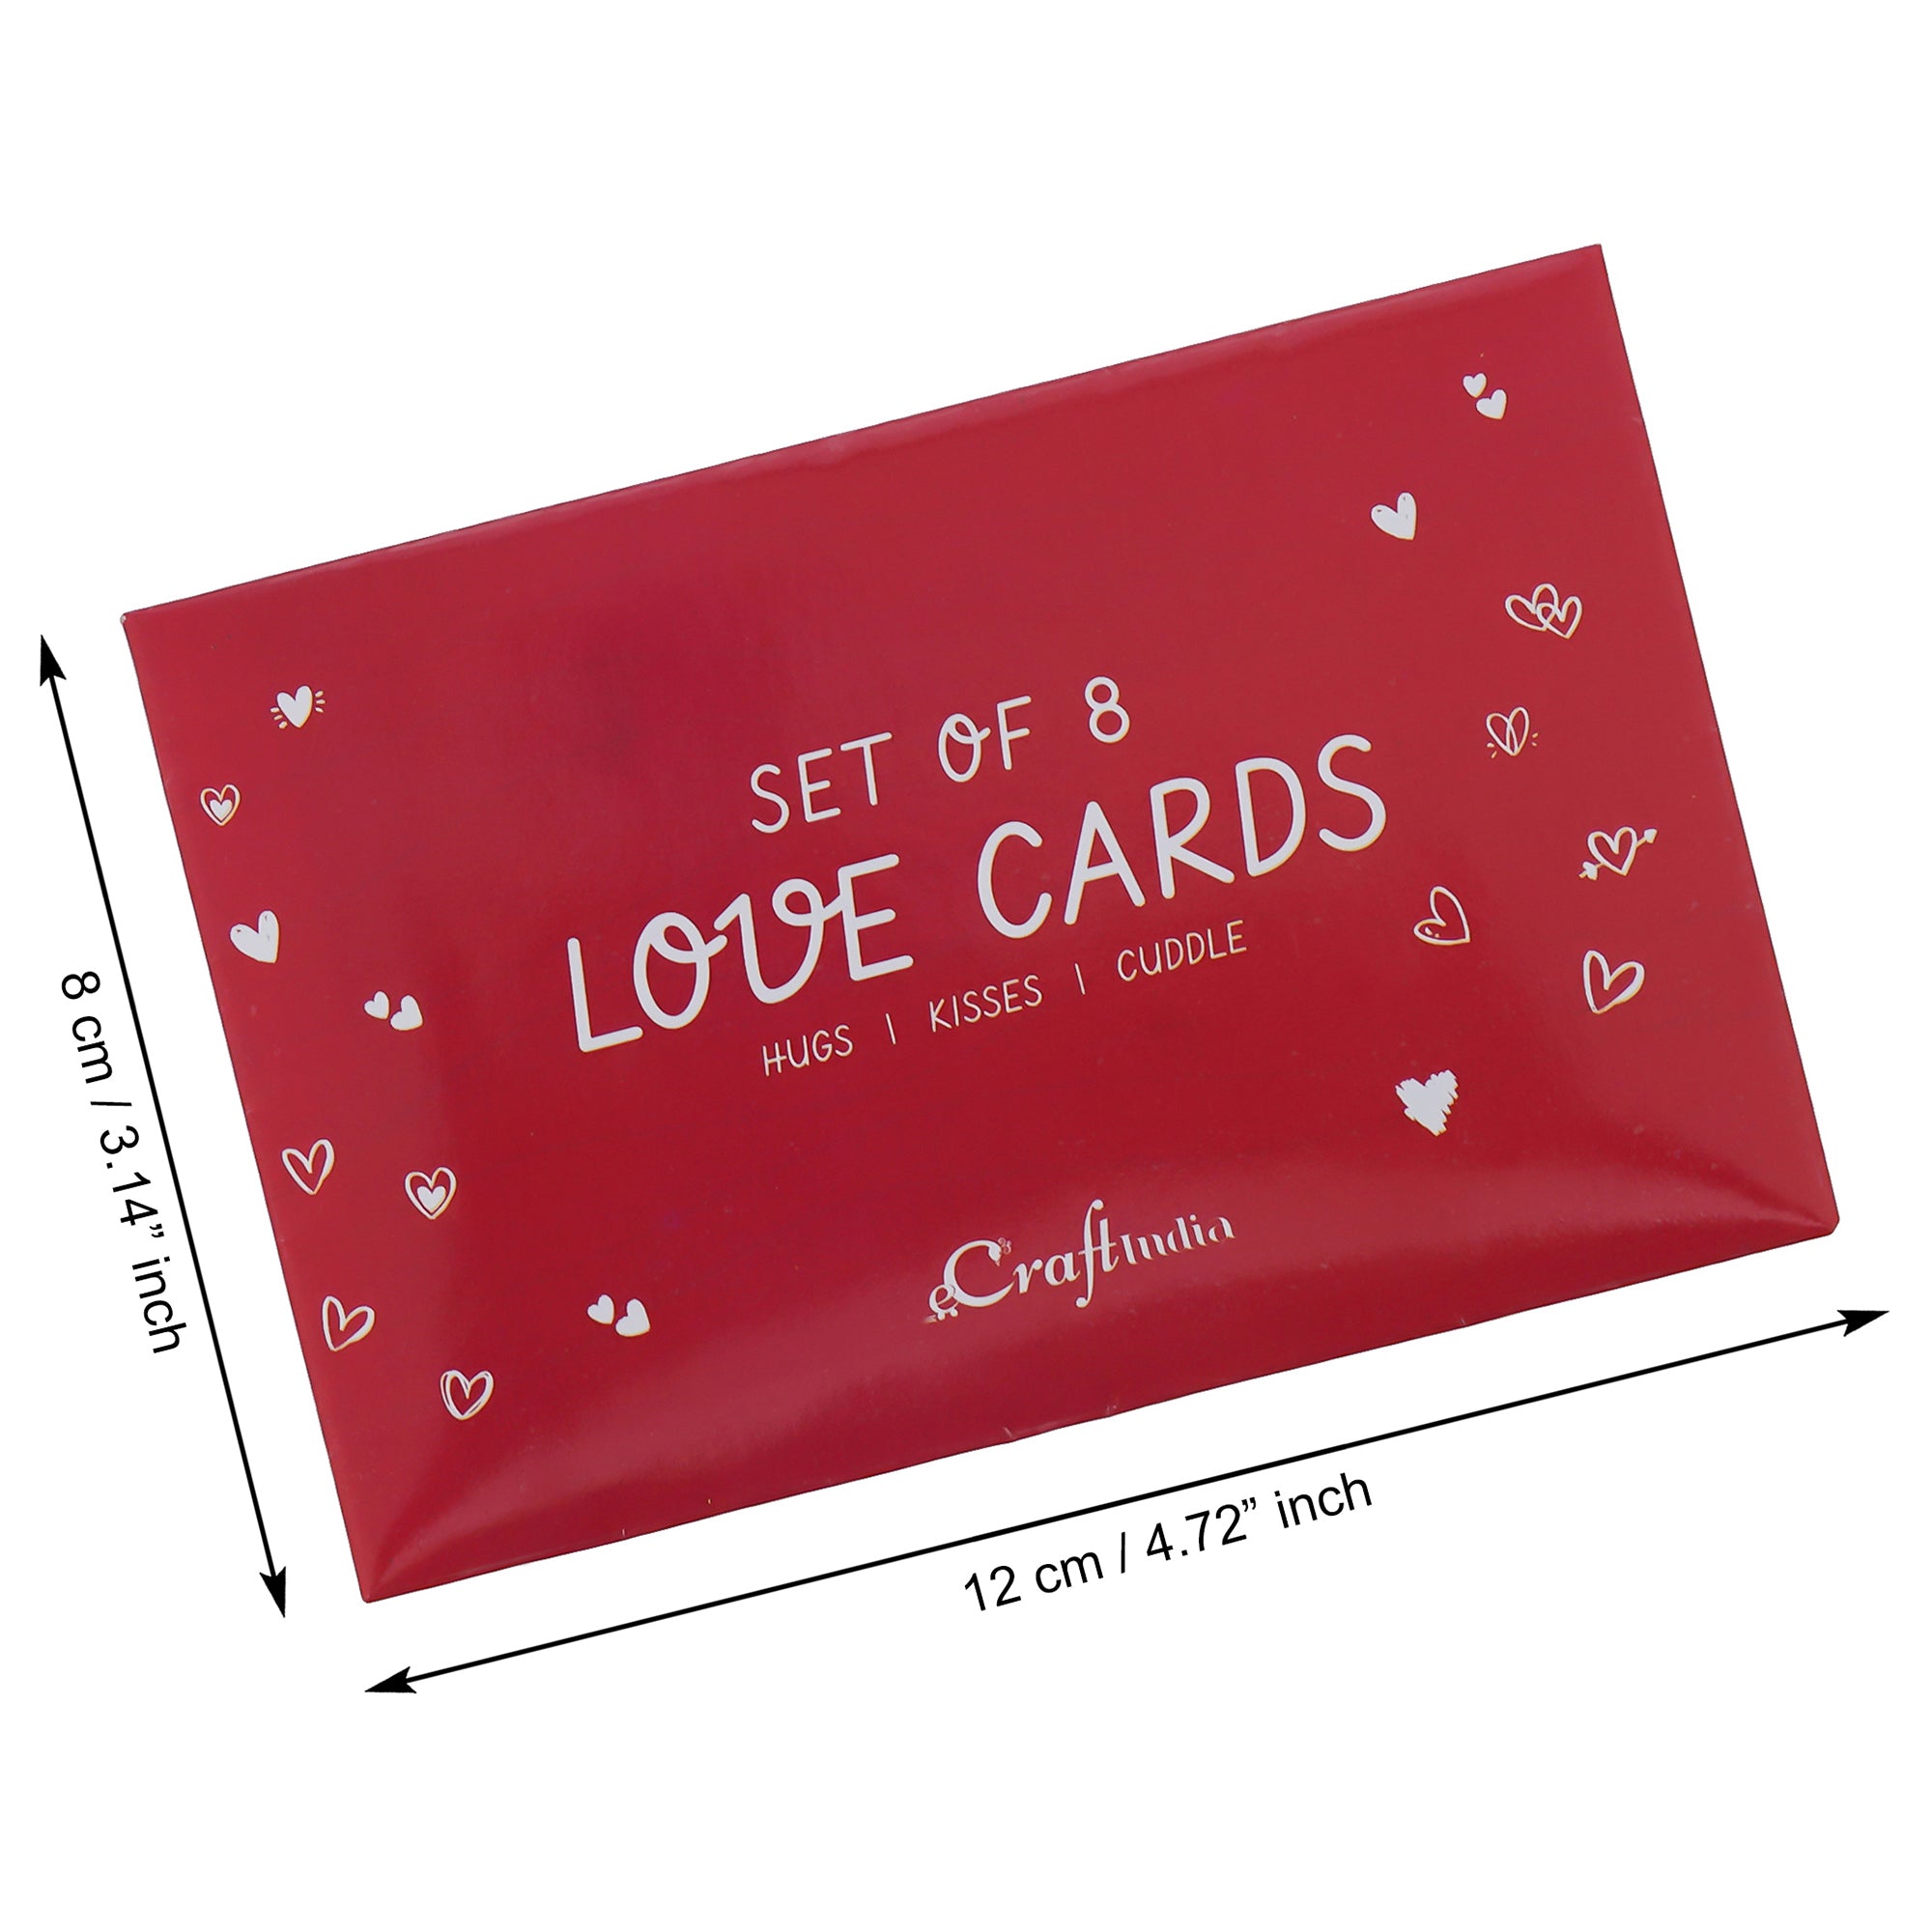 Valentine Combo of Pack of 8 Love Gift Cards, Golden Rose Gift Set, Wooden Box "For You" Message Bottle Set 2